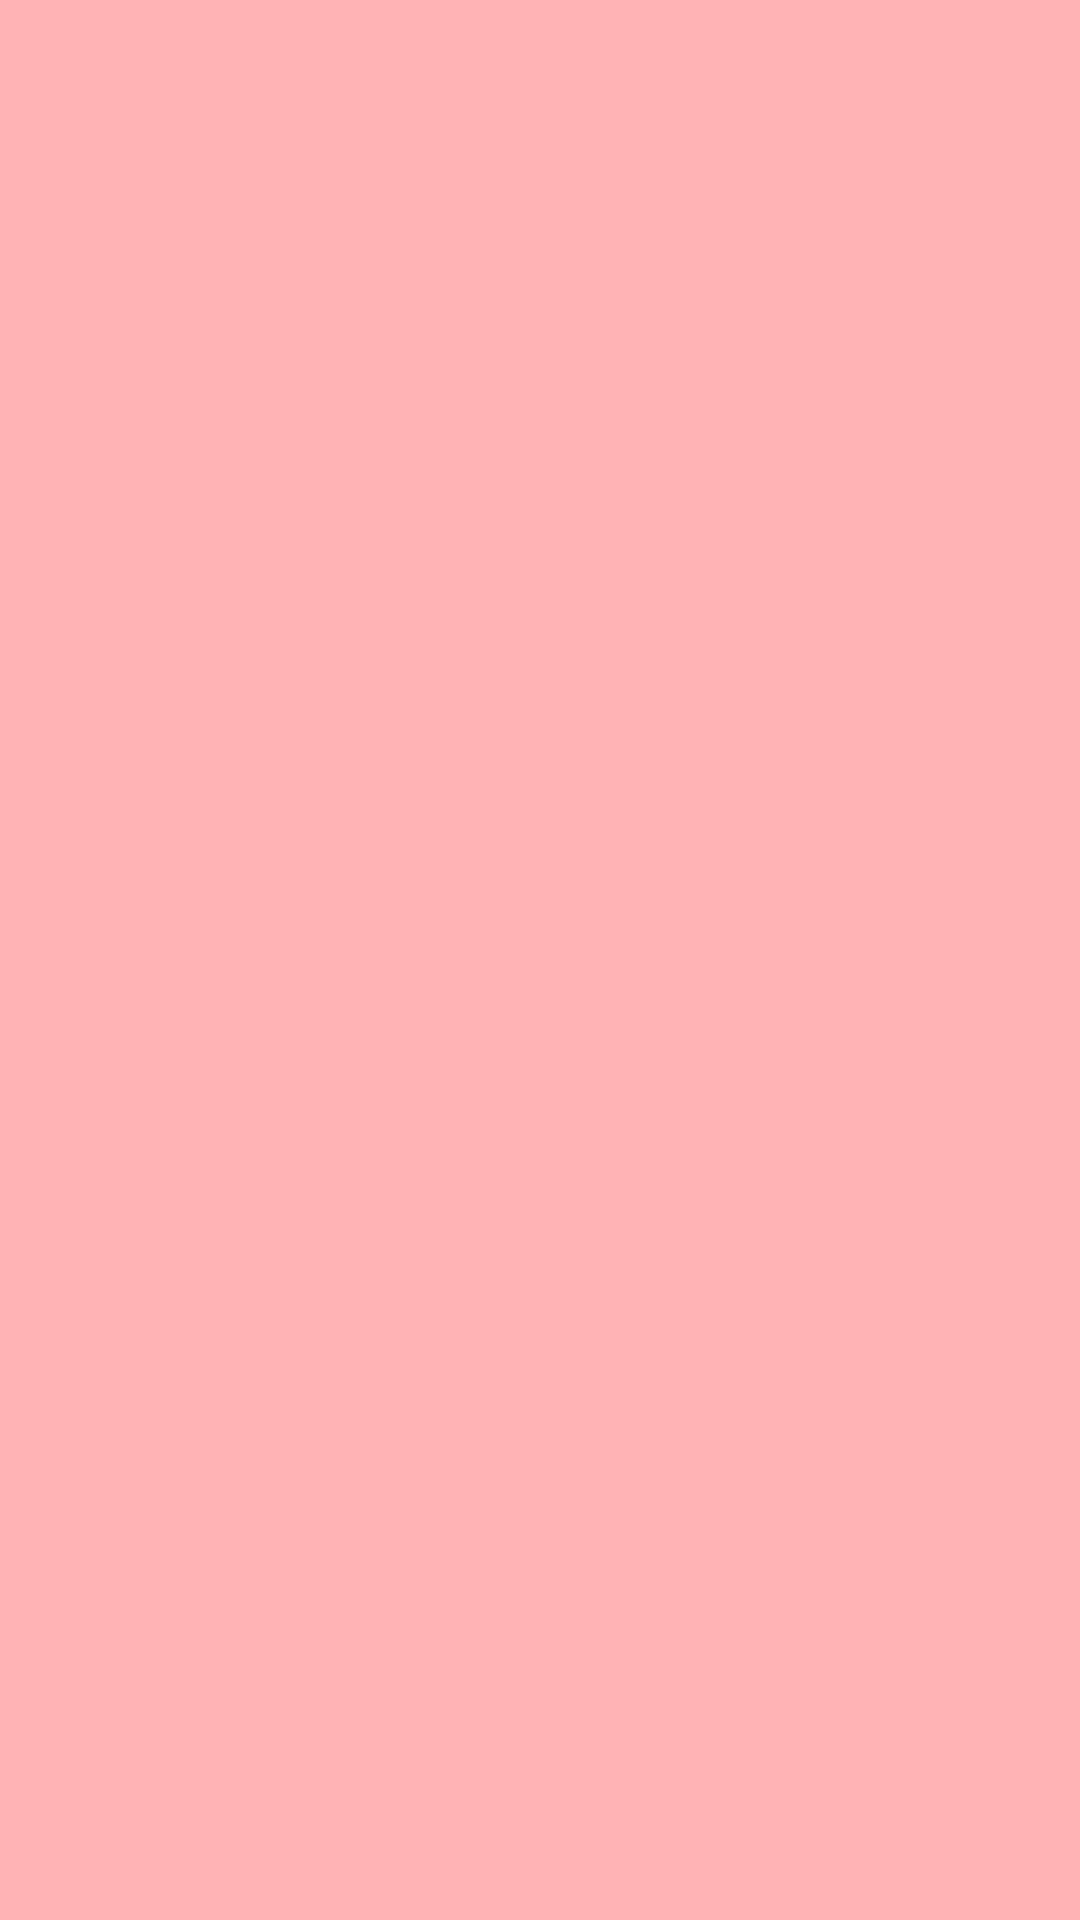 Subtle Elegance Of A Plain Pinkish Peach Shade Background